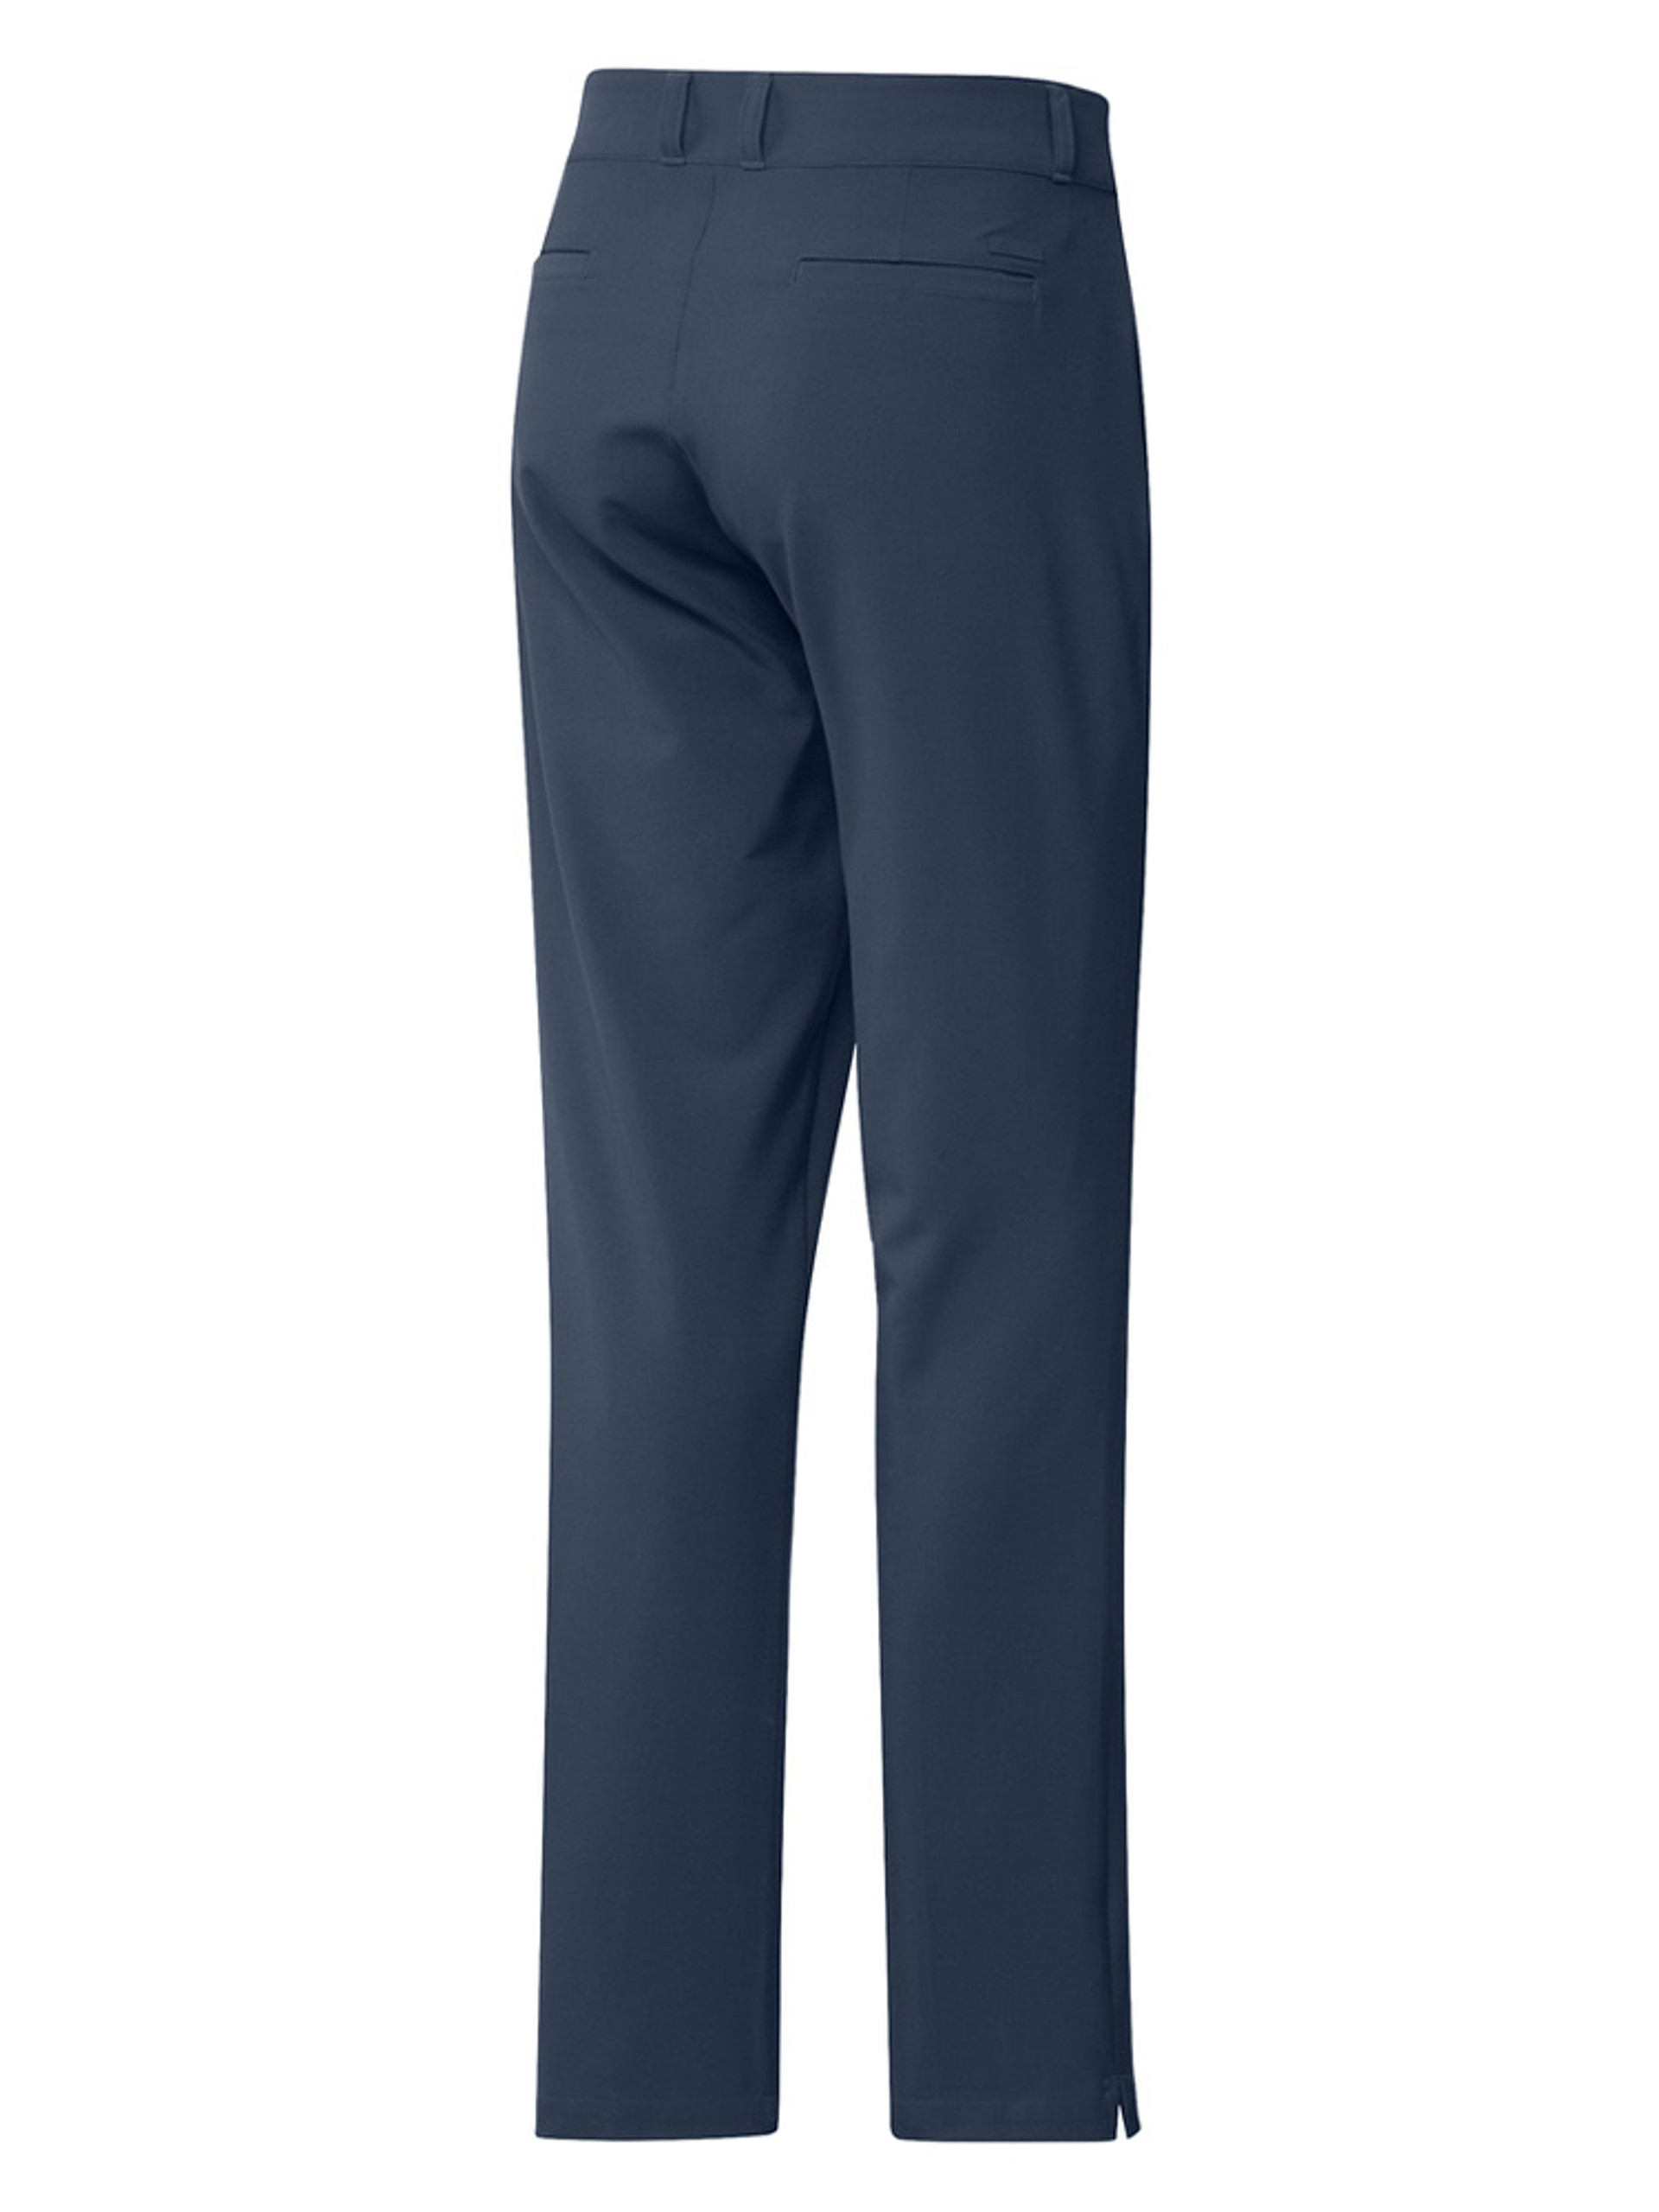 adidas W Primegreen Full-Length Pants - Crew Navy - Ladies | GolfBox